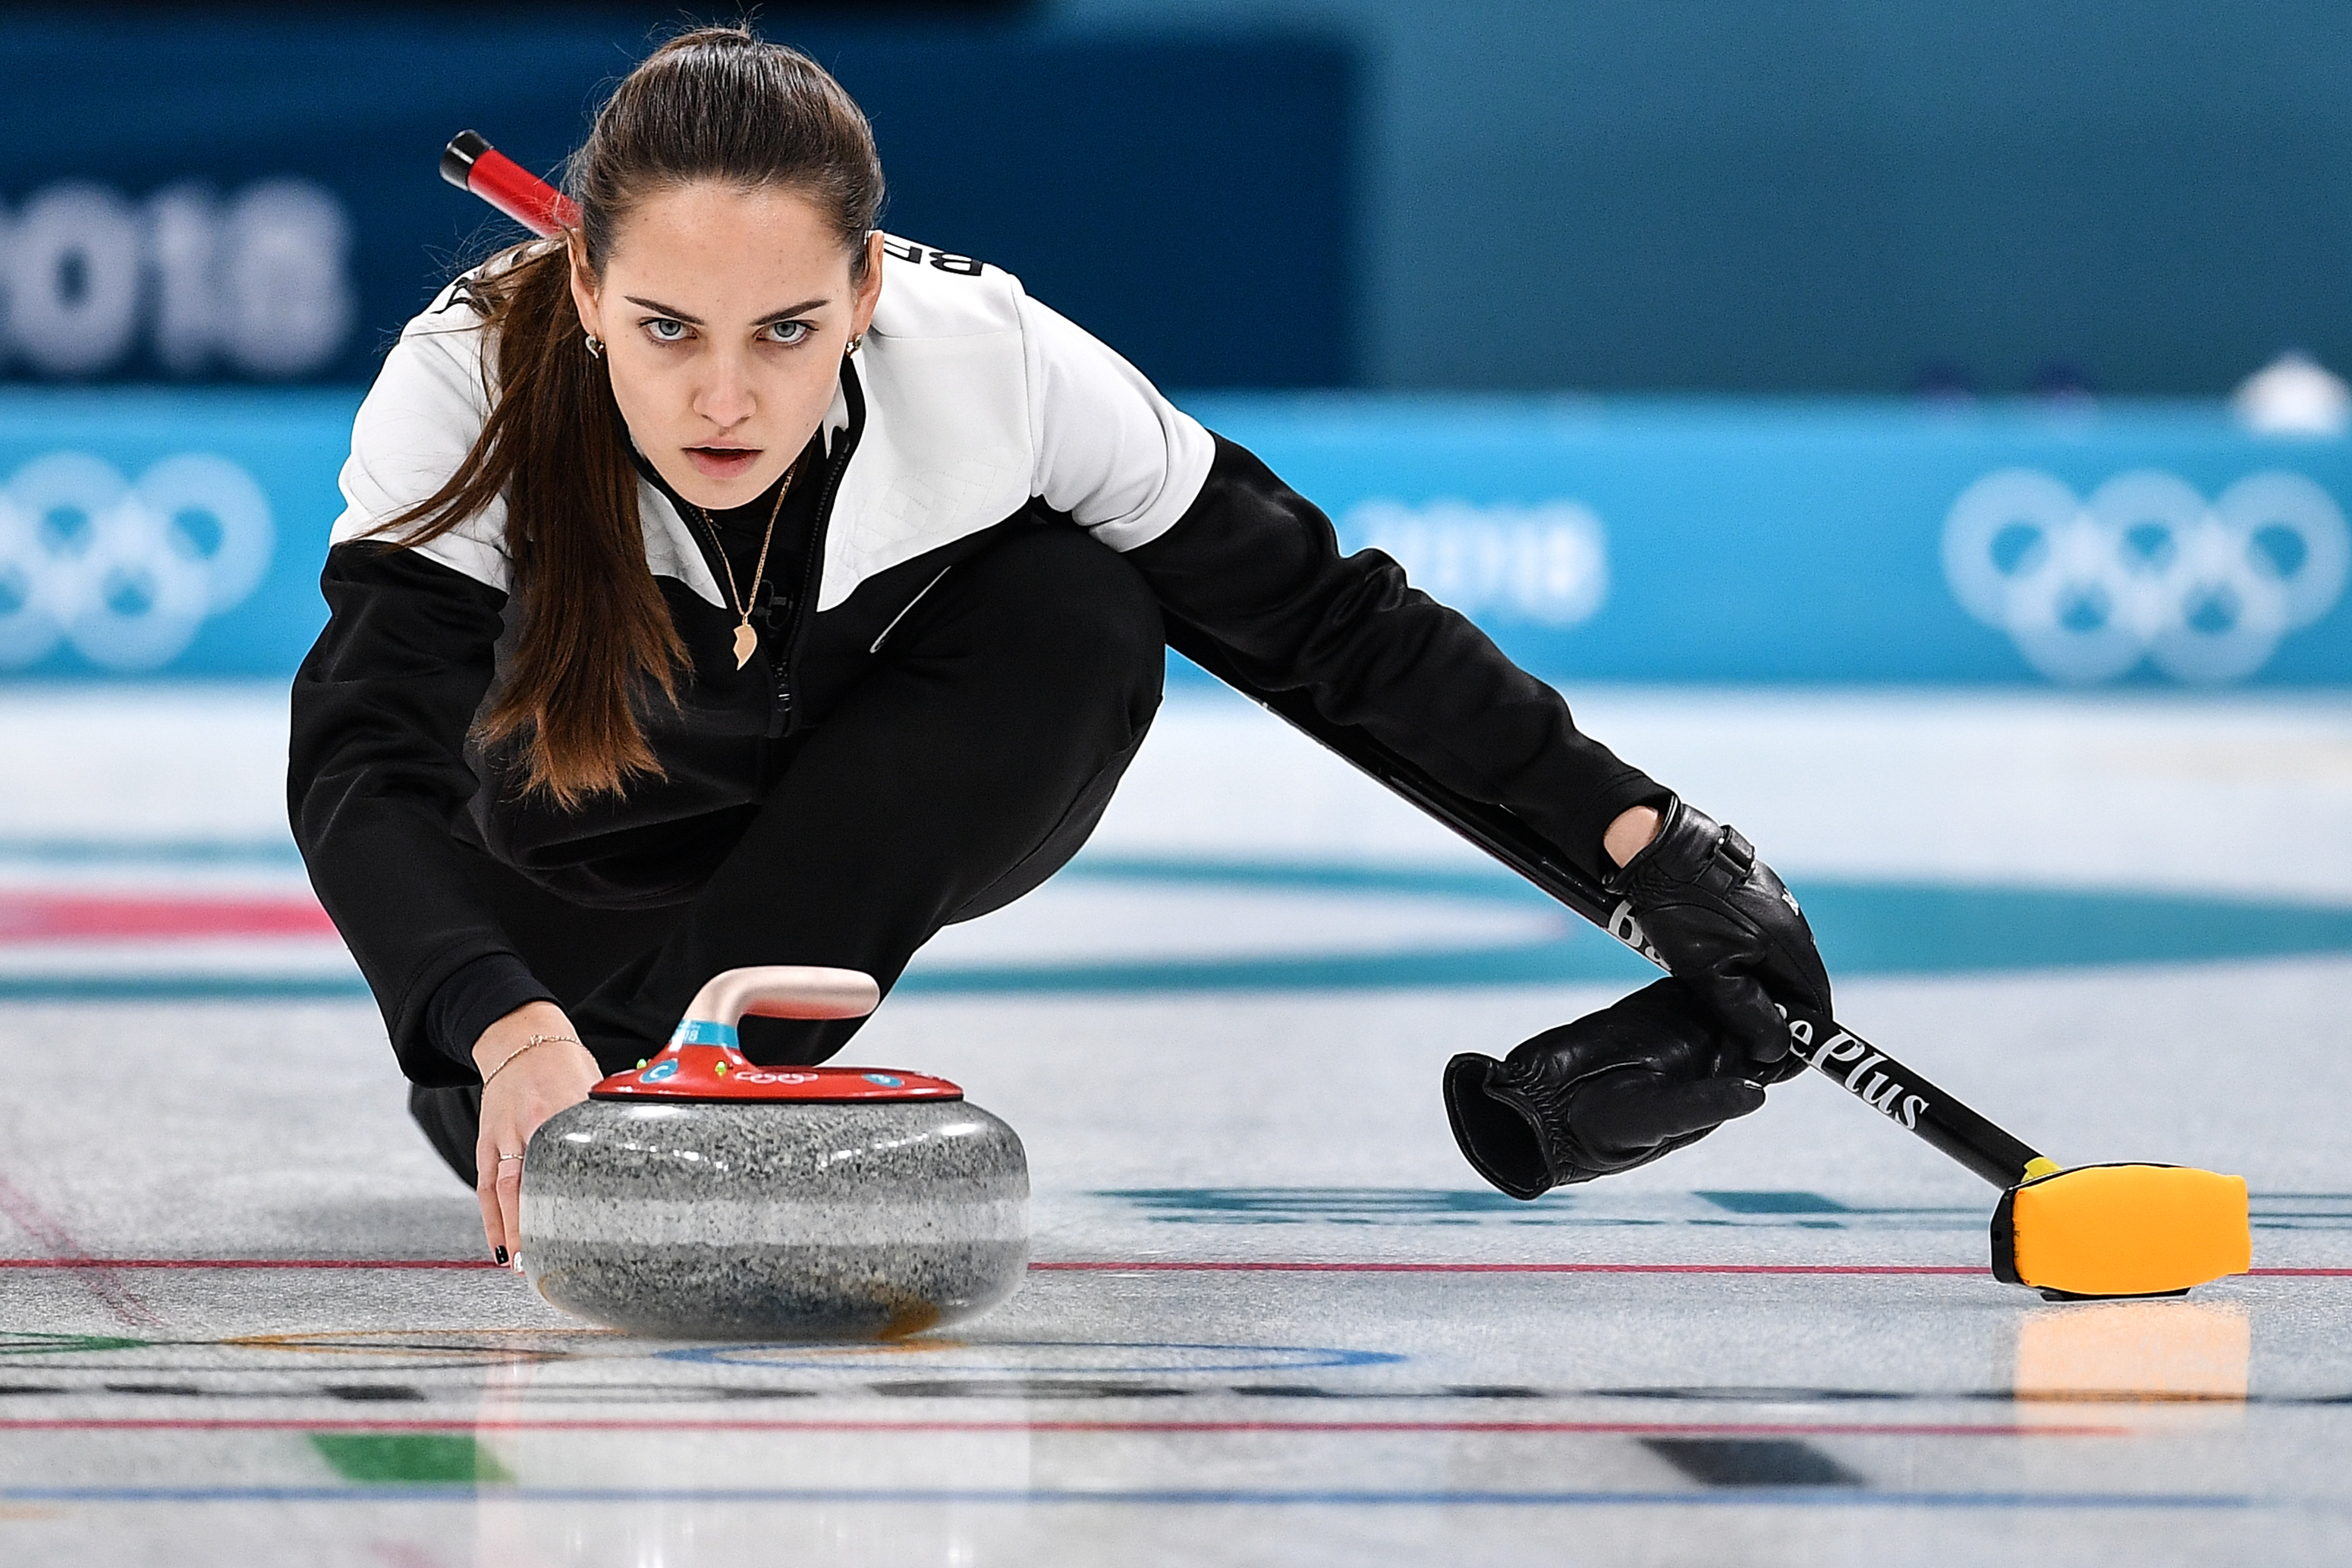 Image: Anastasia, Bryzgalova, Curling